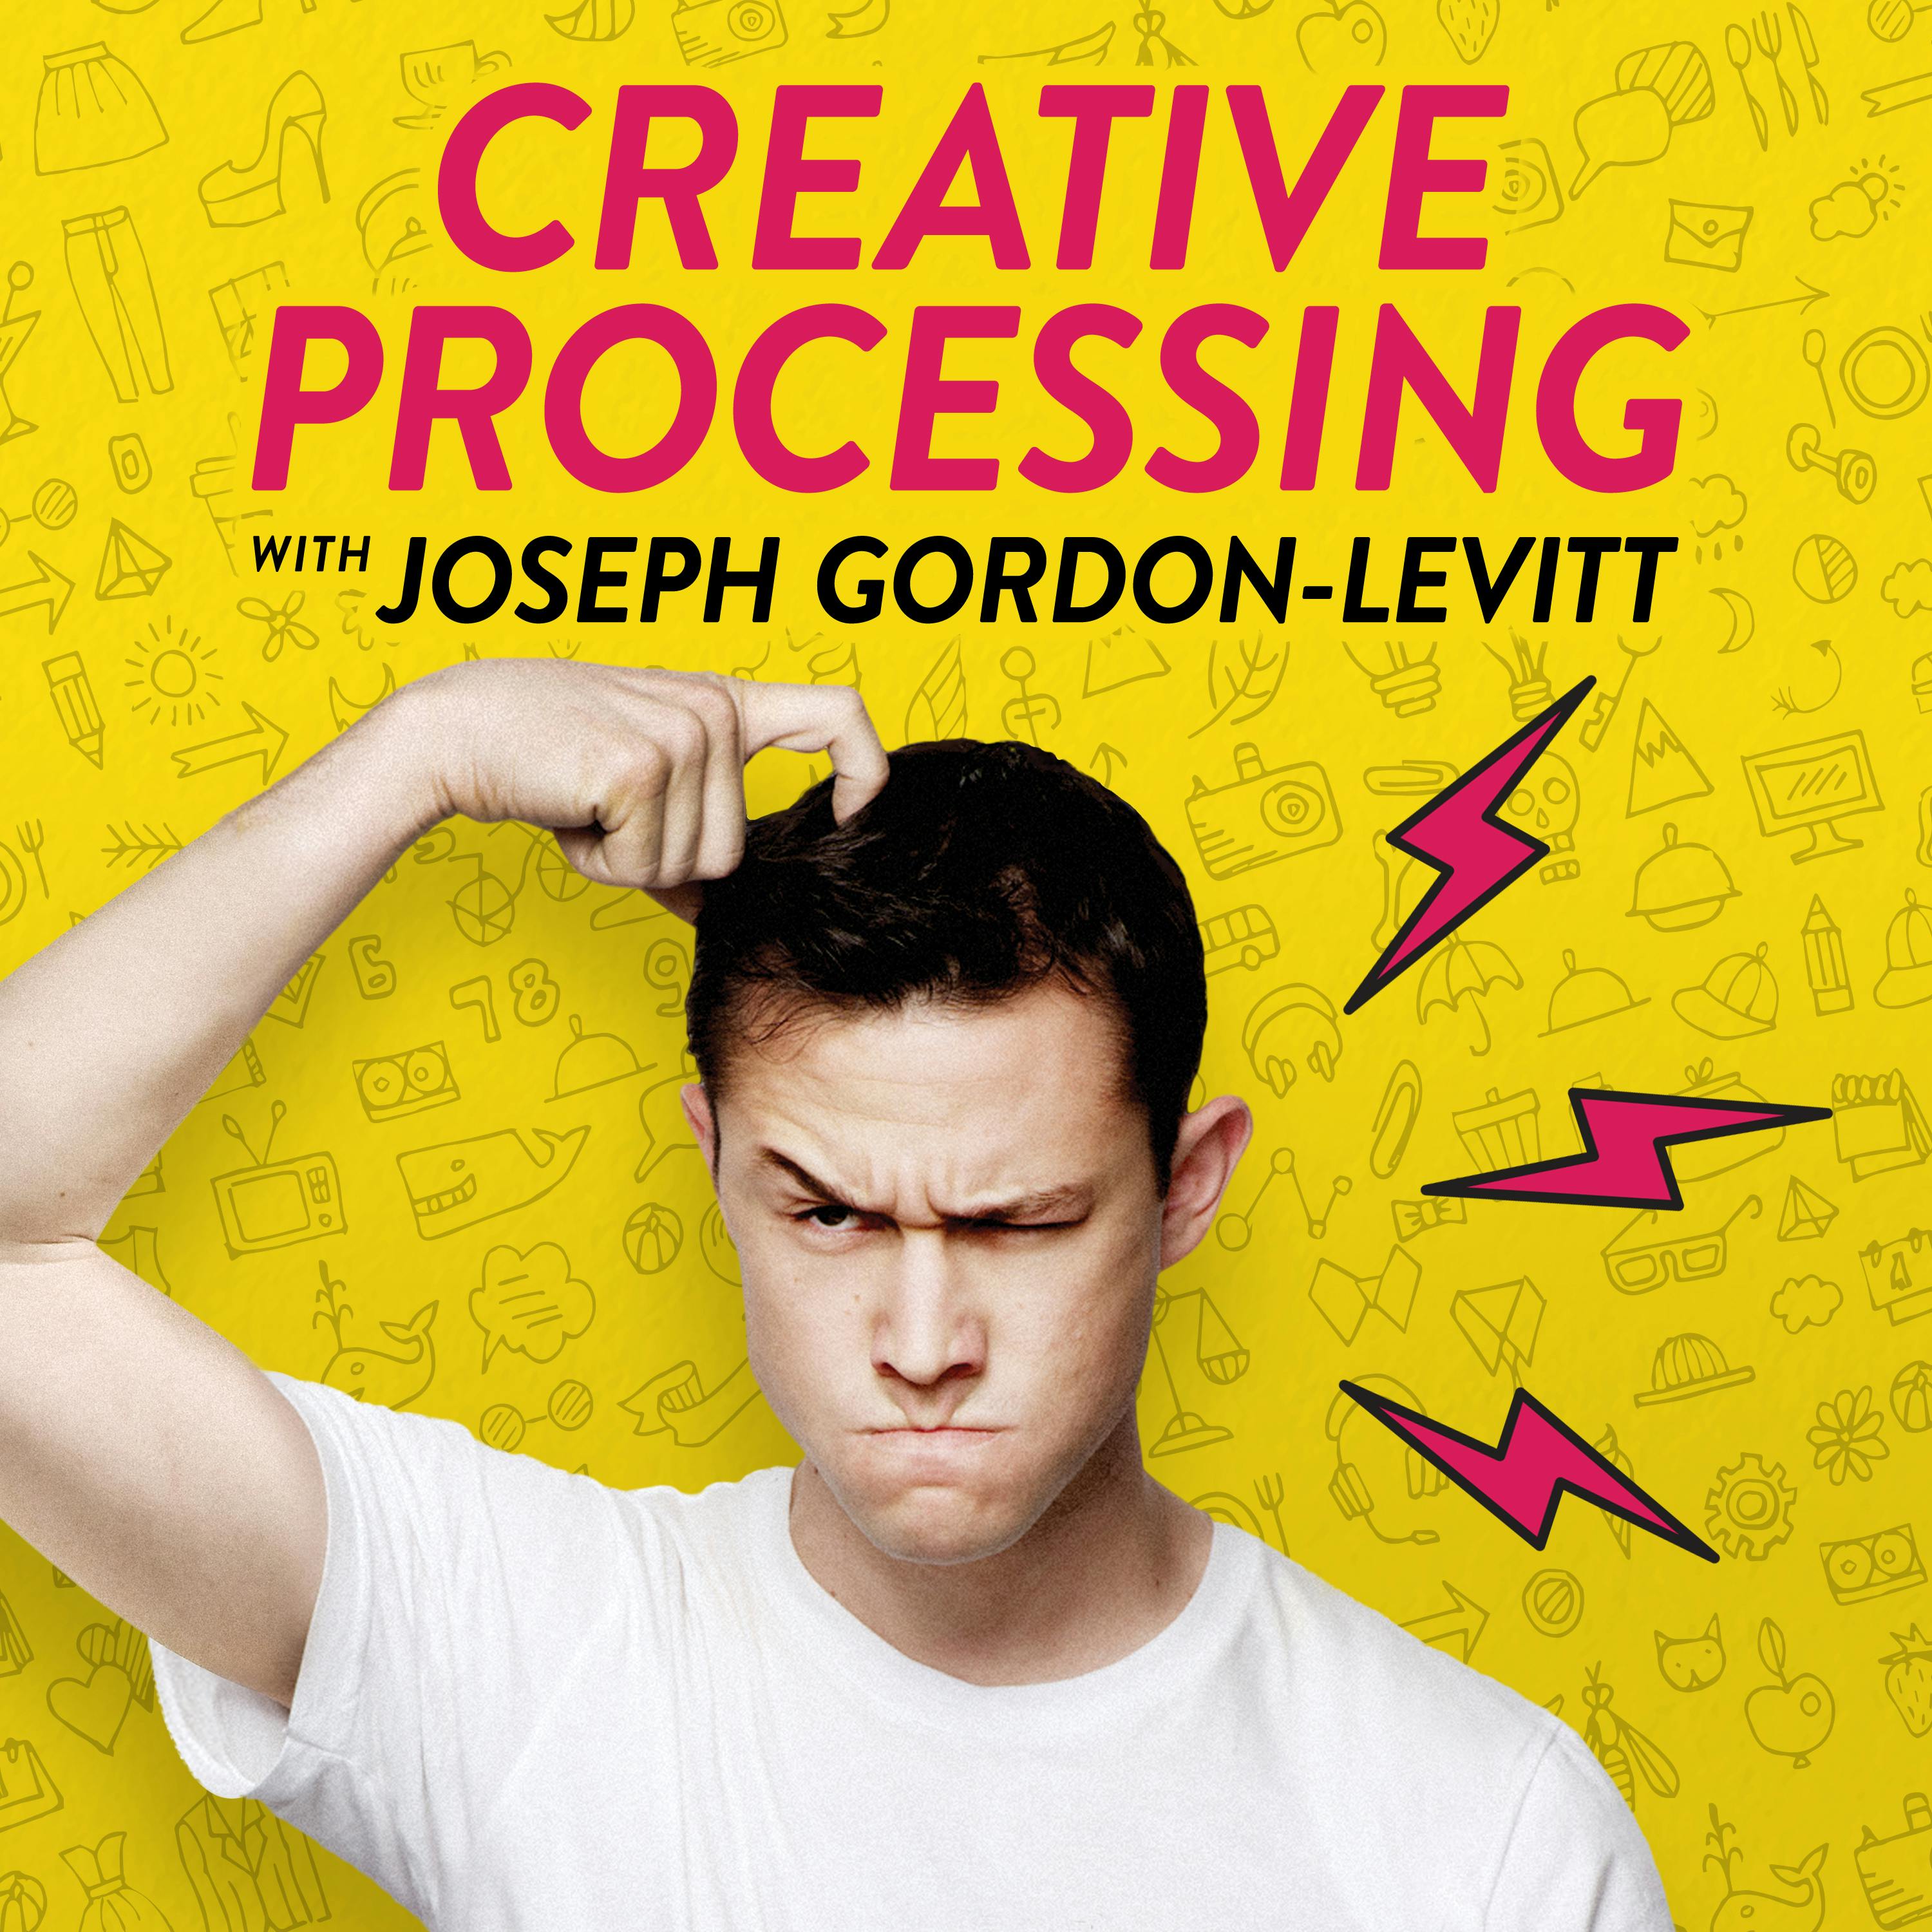 Creative Processing with Joseph Gordon-Levitt podcast show image